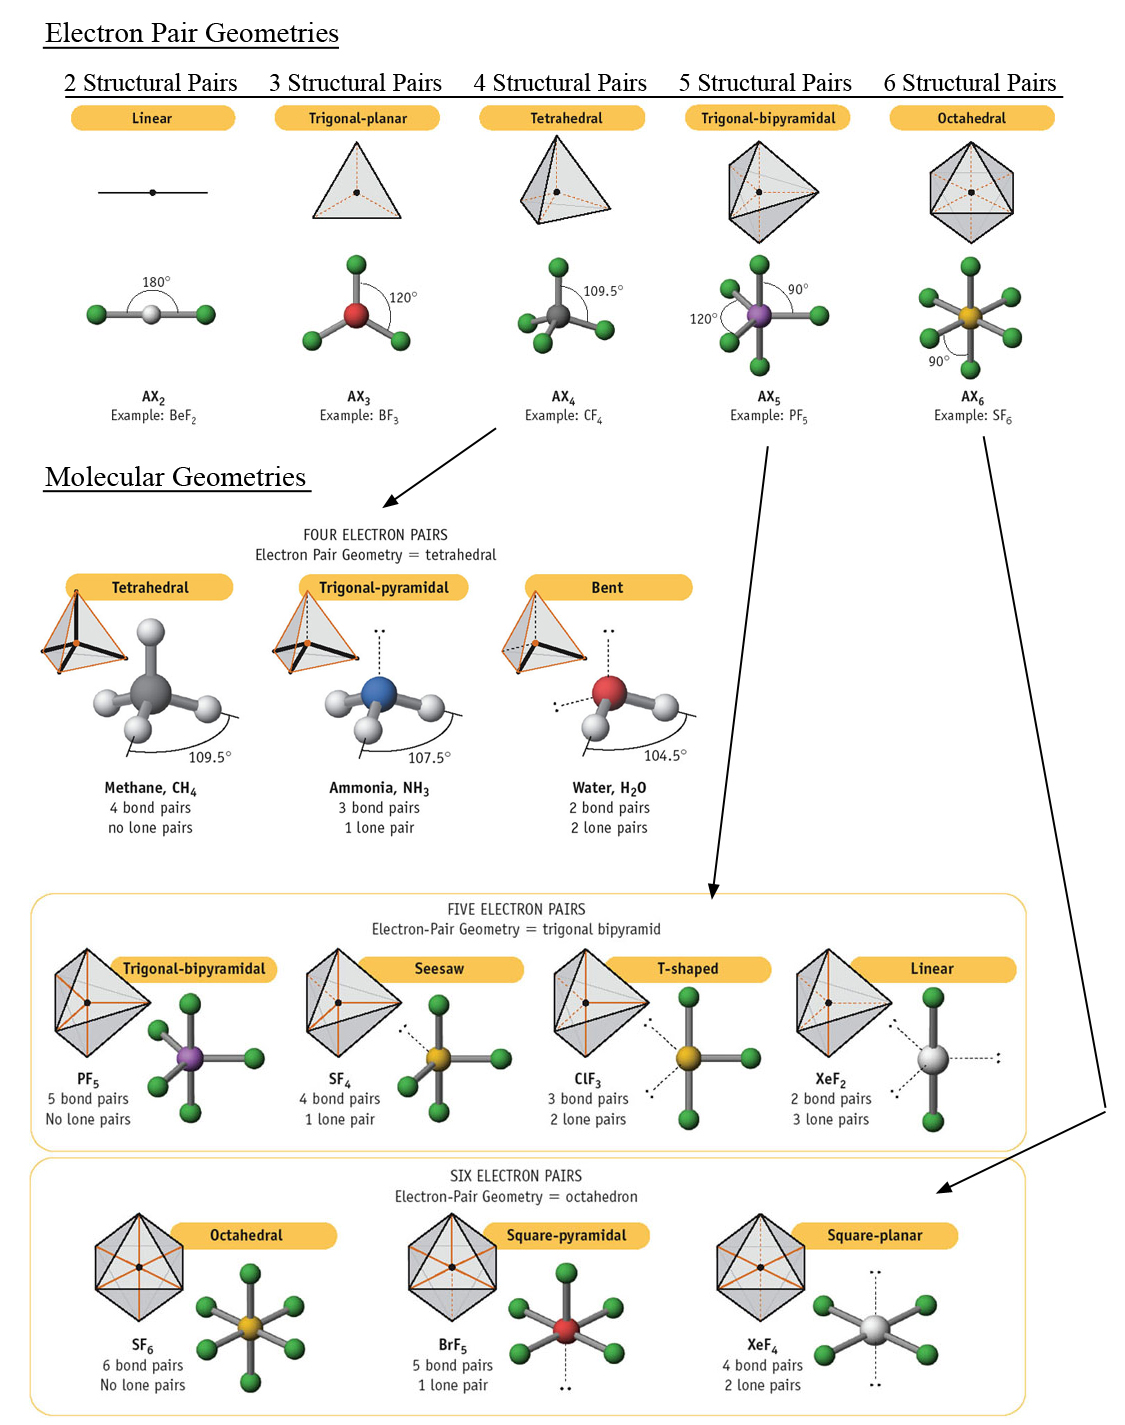 molecular geometry table 7.4